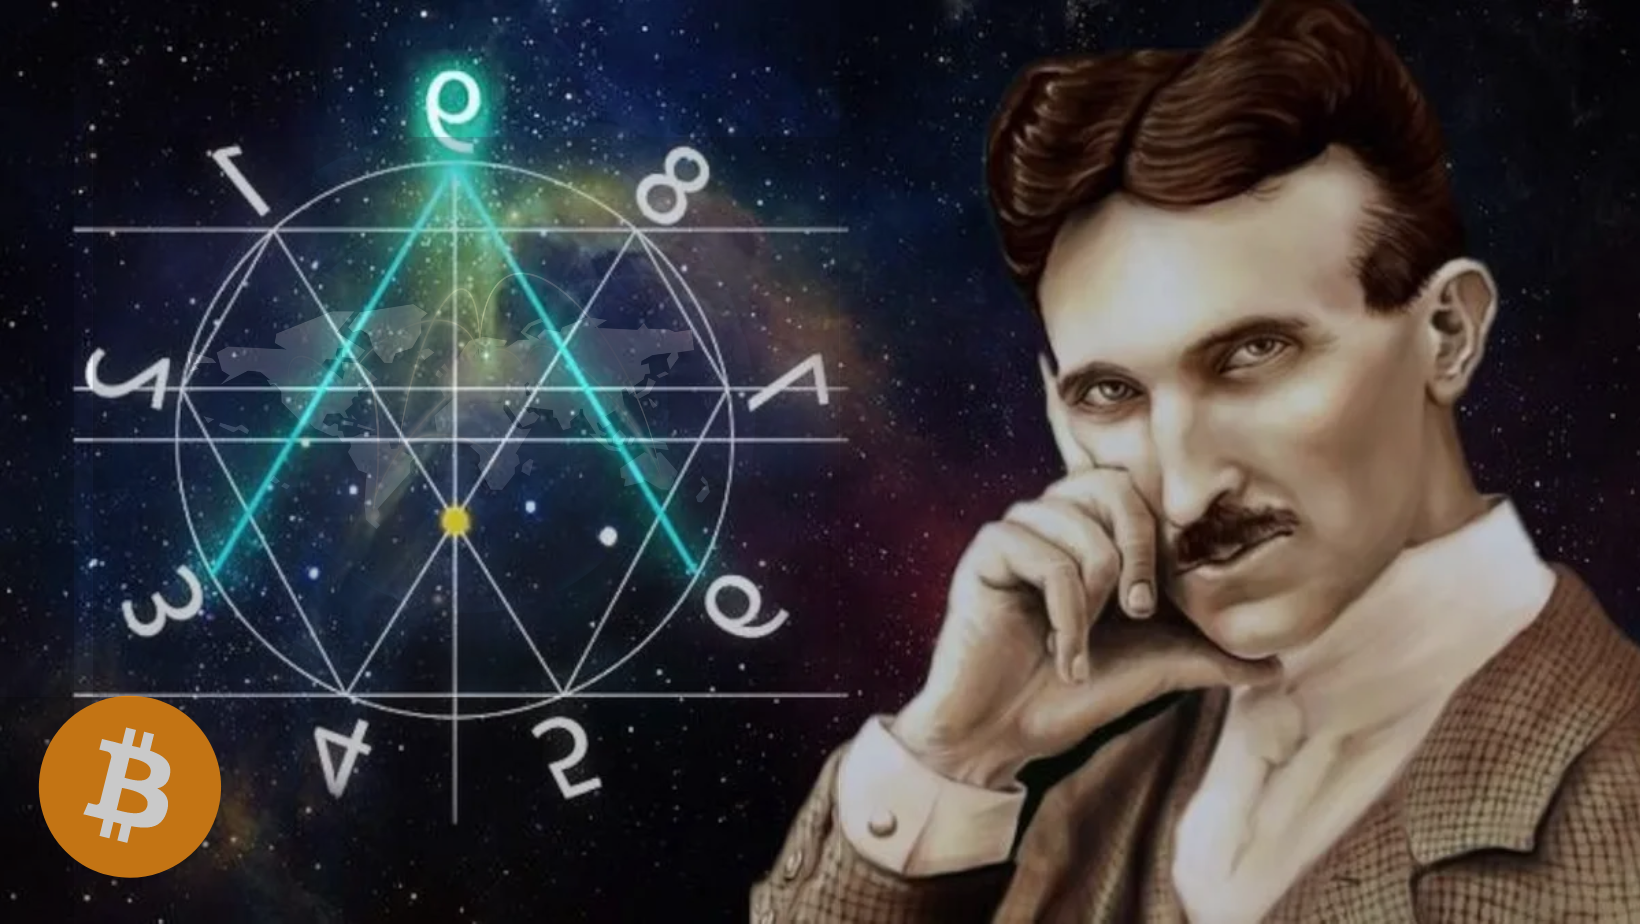 Bitcoin & Nikola Tesla's Key to Universe with Numbers 3,6,9